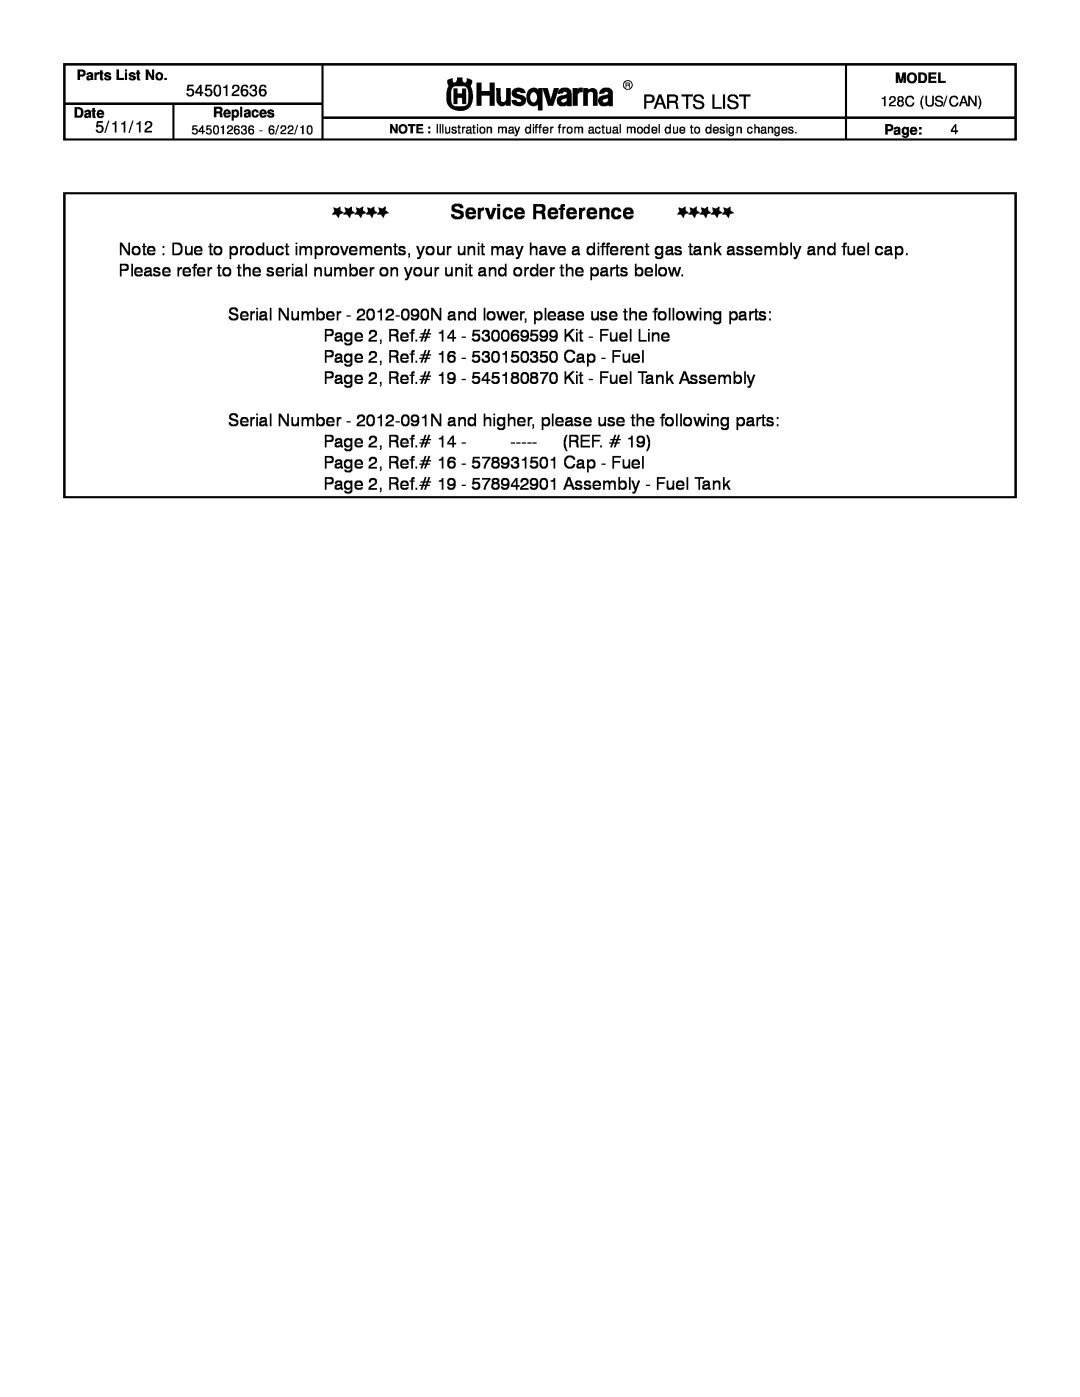 Husqvarna 952711947 manual Service Reference, Par Ts List, Page 2, Ref.# 14 - 530069599 Kit - Fuel Line 